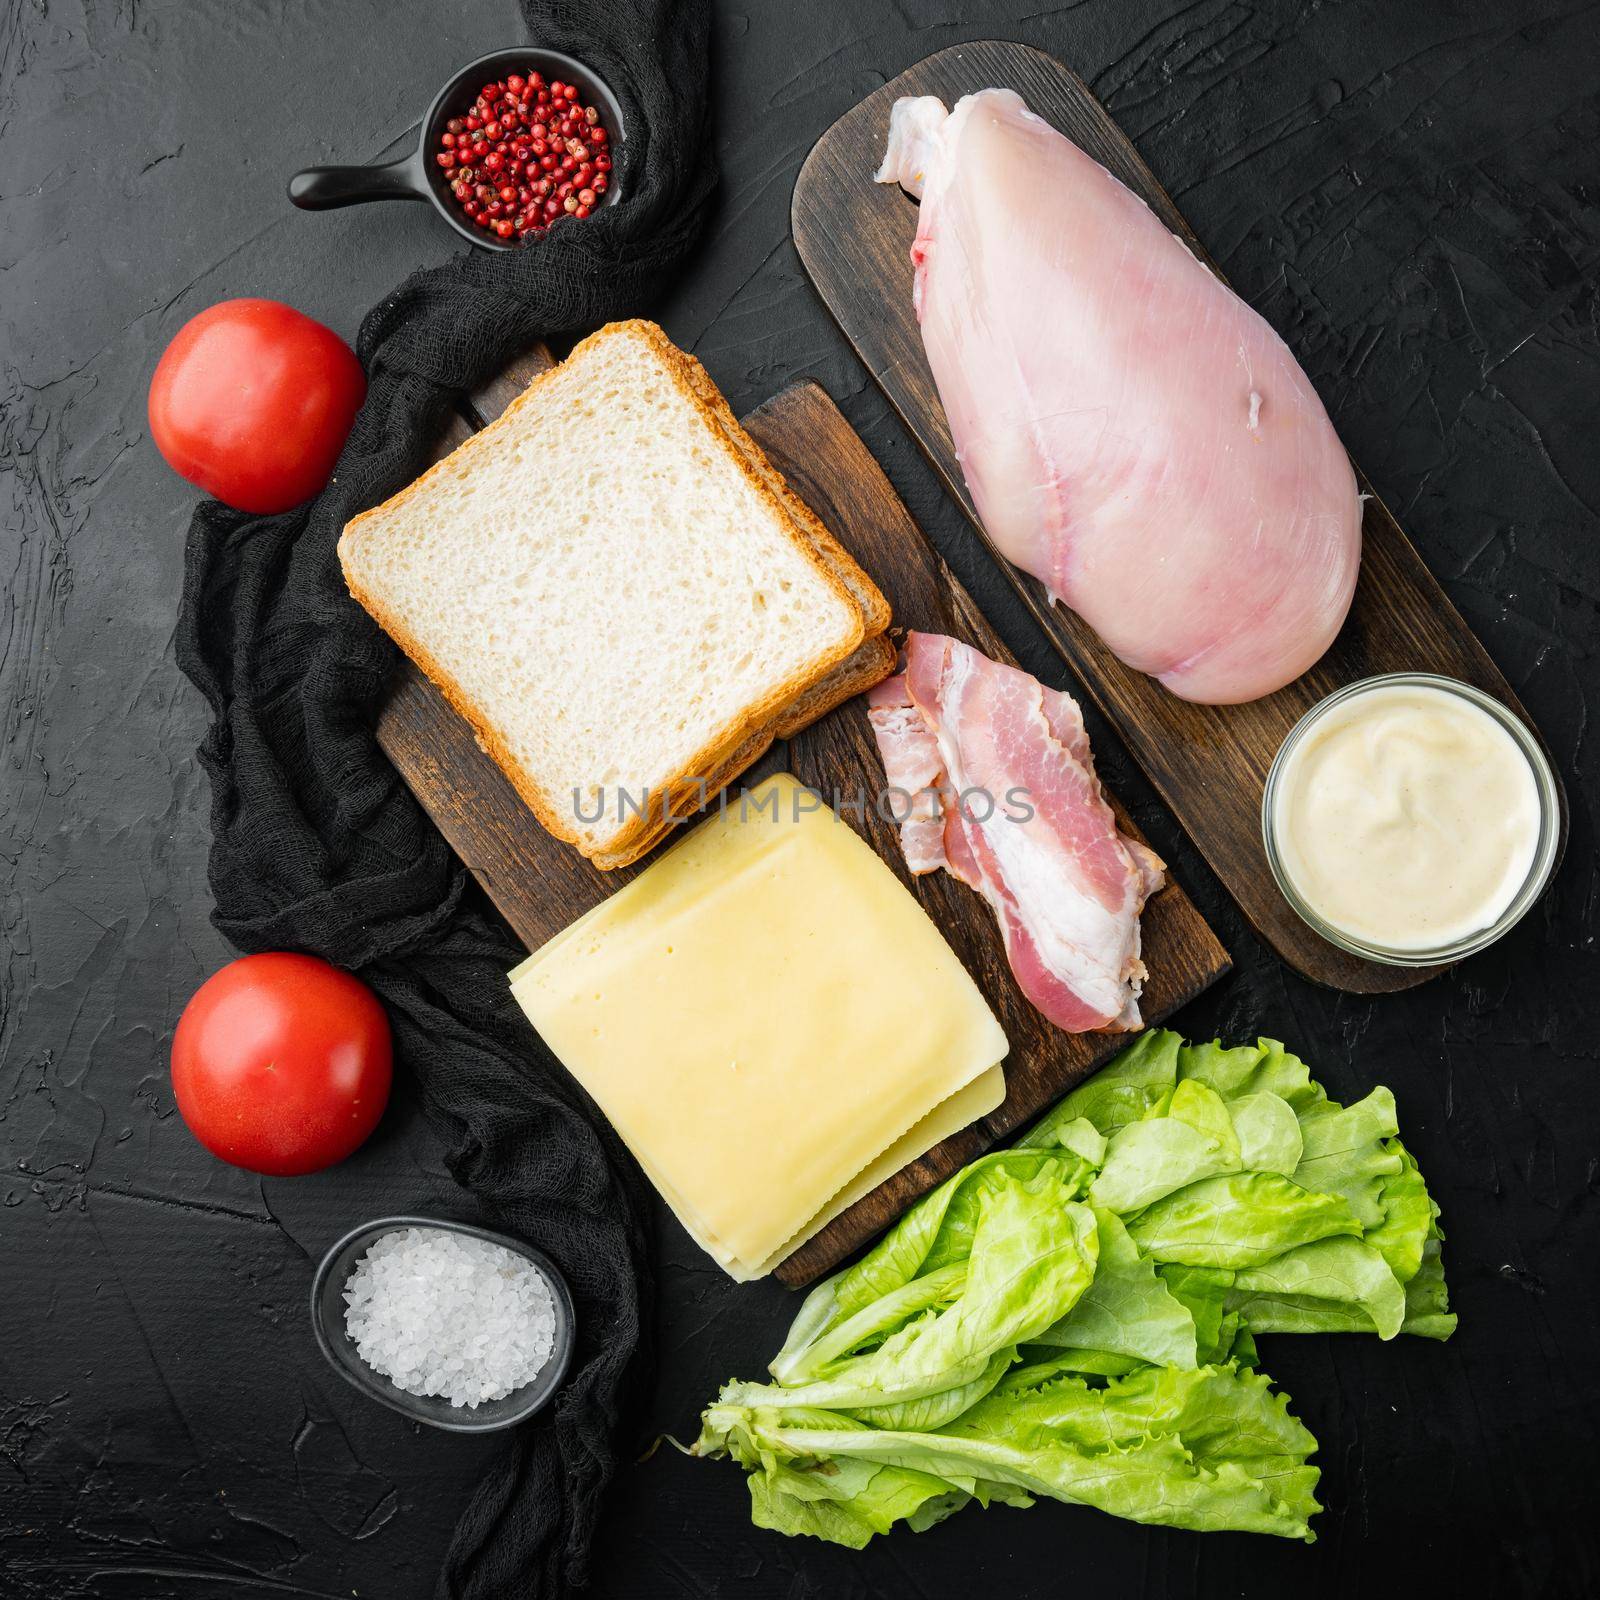 Club sandwich ingredients, on black background, top view by Ilianesolenyi